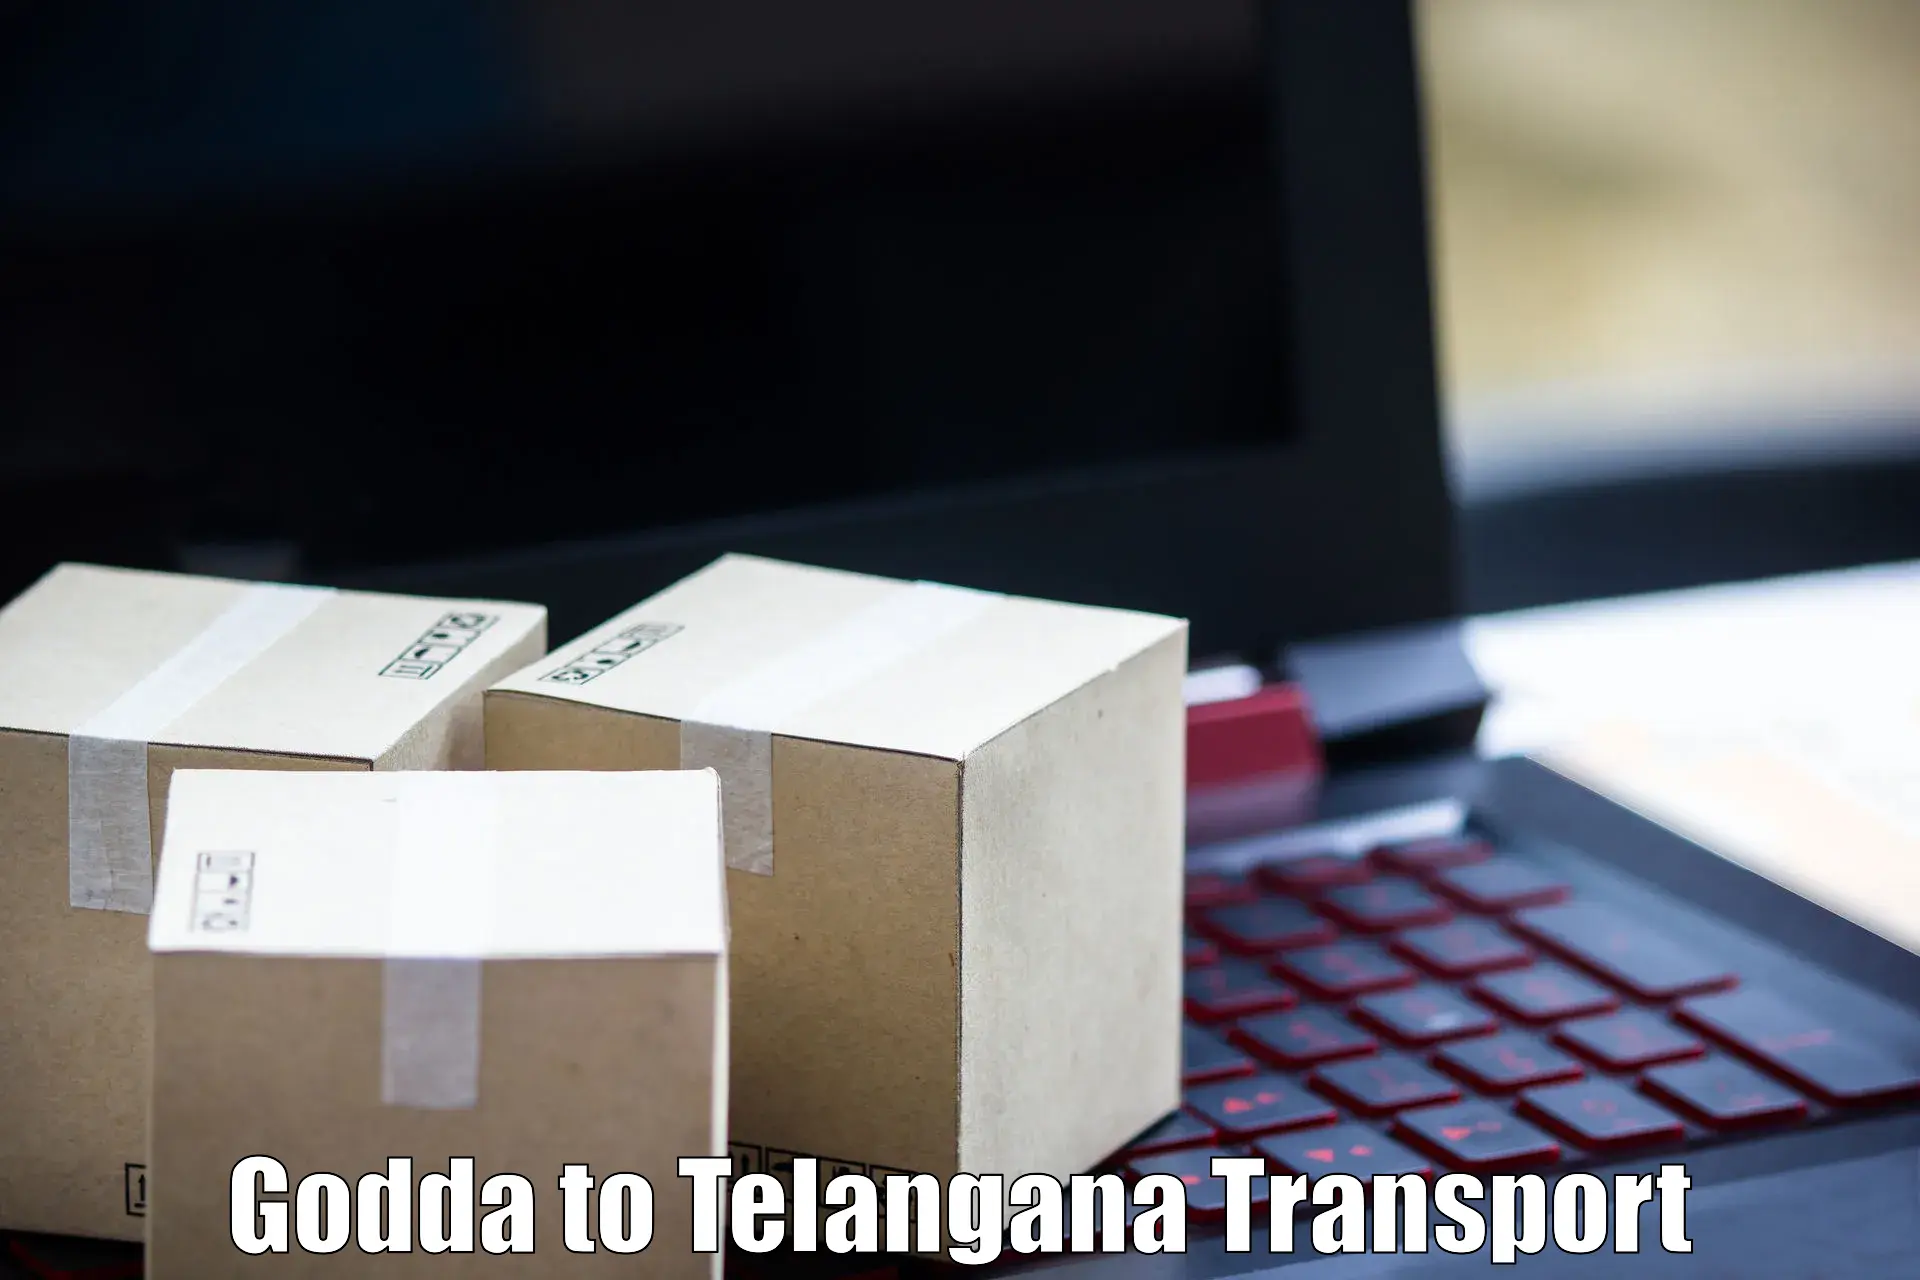 Delivery service Godda to Gangadhara